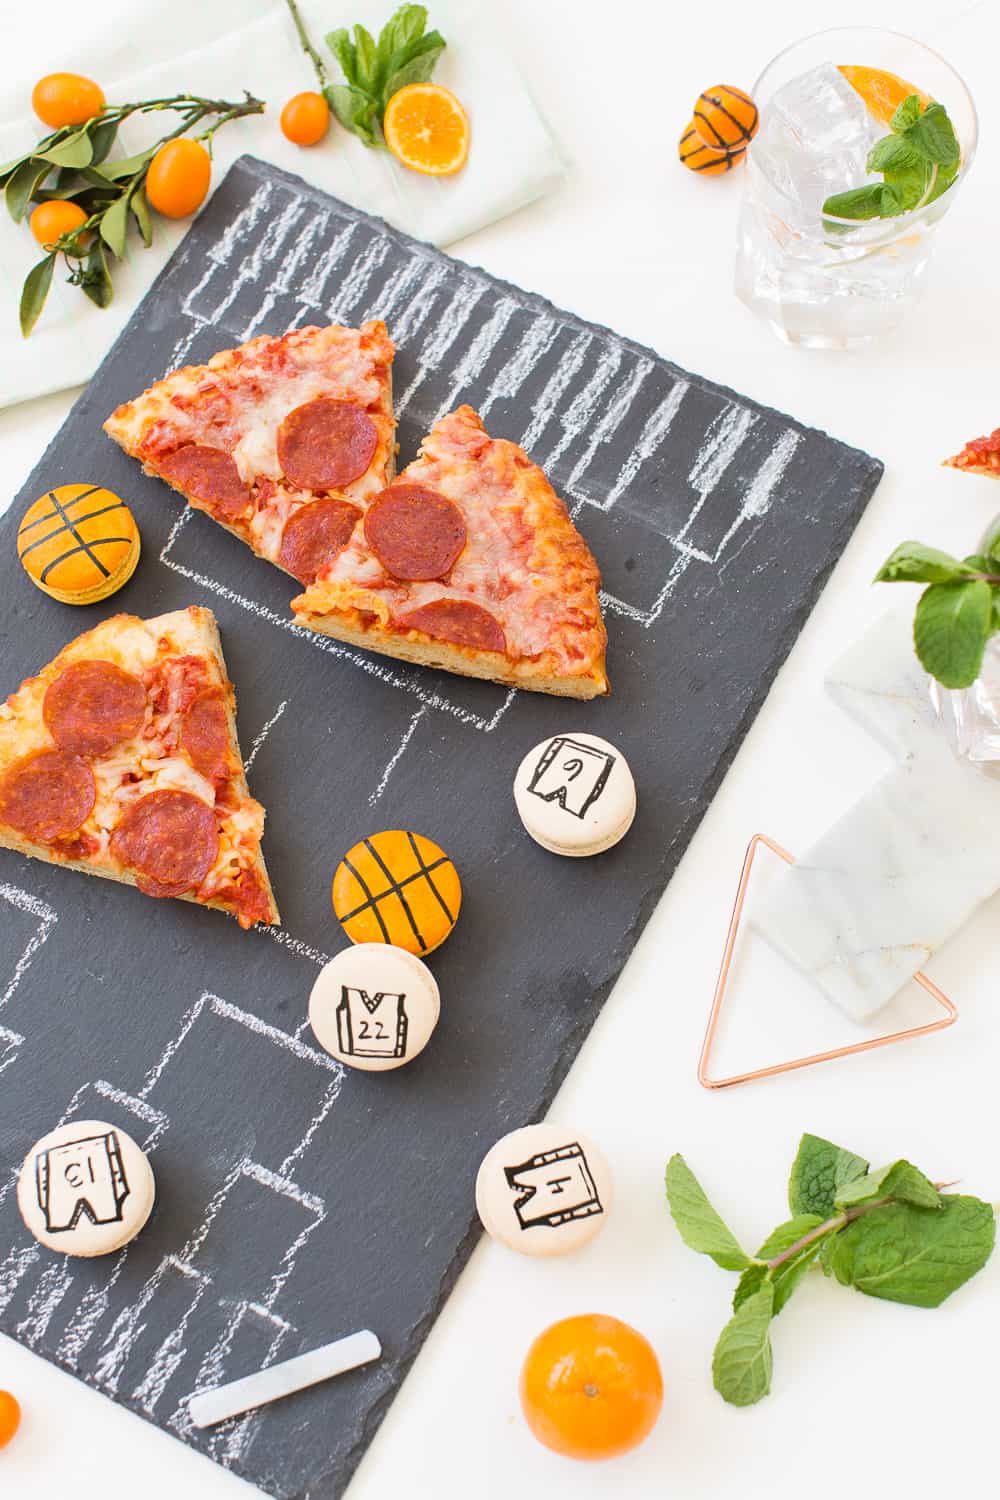 Basketball Watch Party Food – 3 Fun DIY Basketball Themed Ideas!